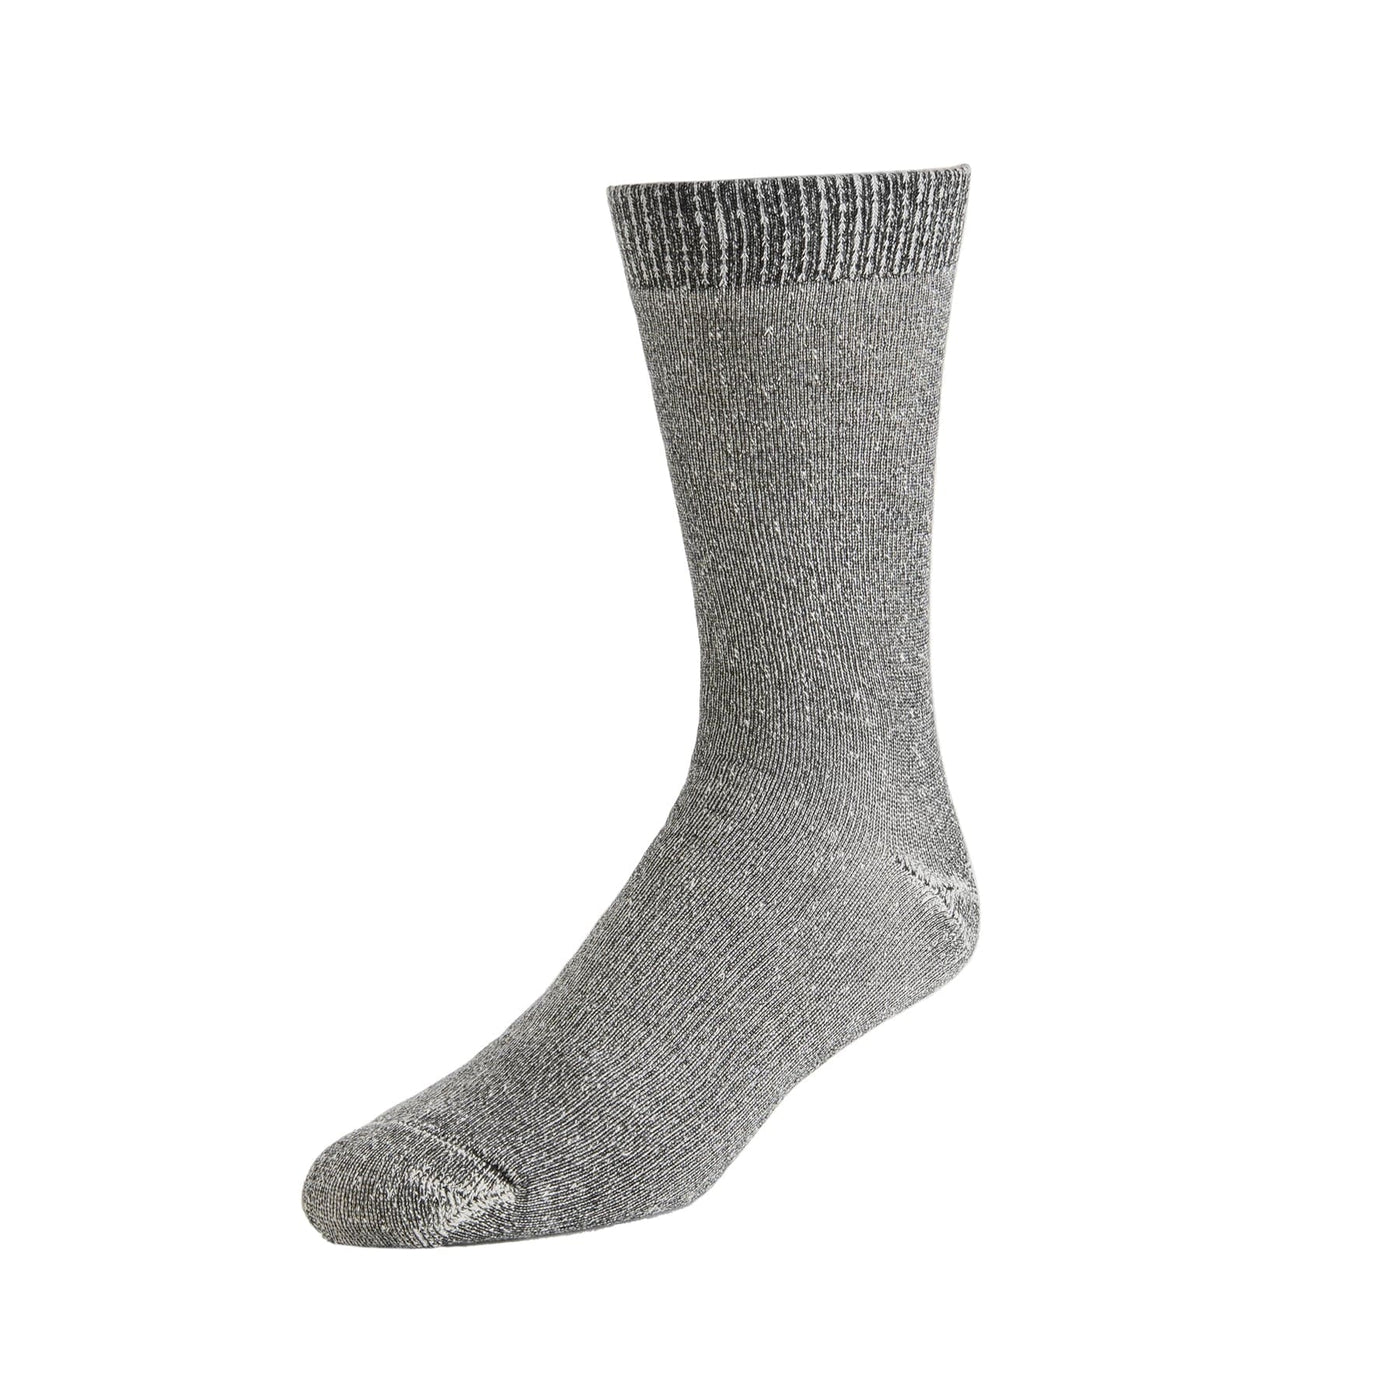 Zkano Boot Socks Large Canyon - full cushion organic cotton boot socks - charcoal organic-socks-made-in-usa